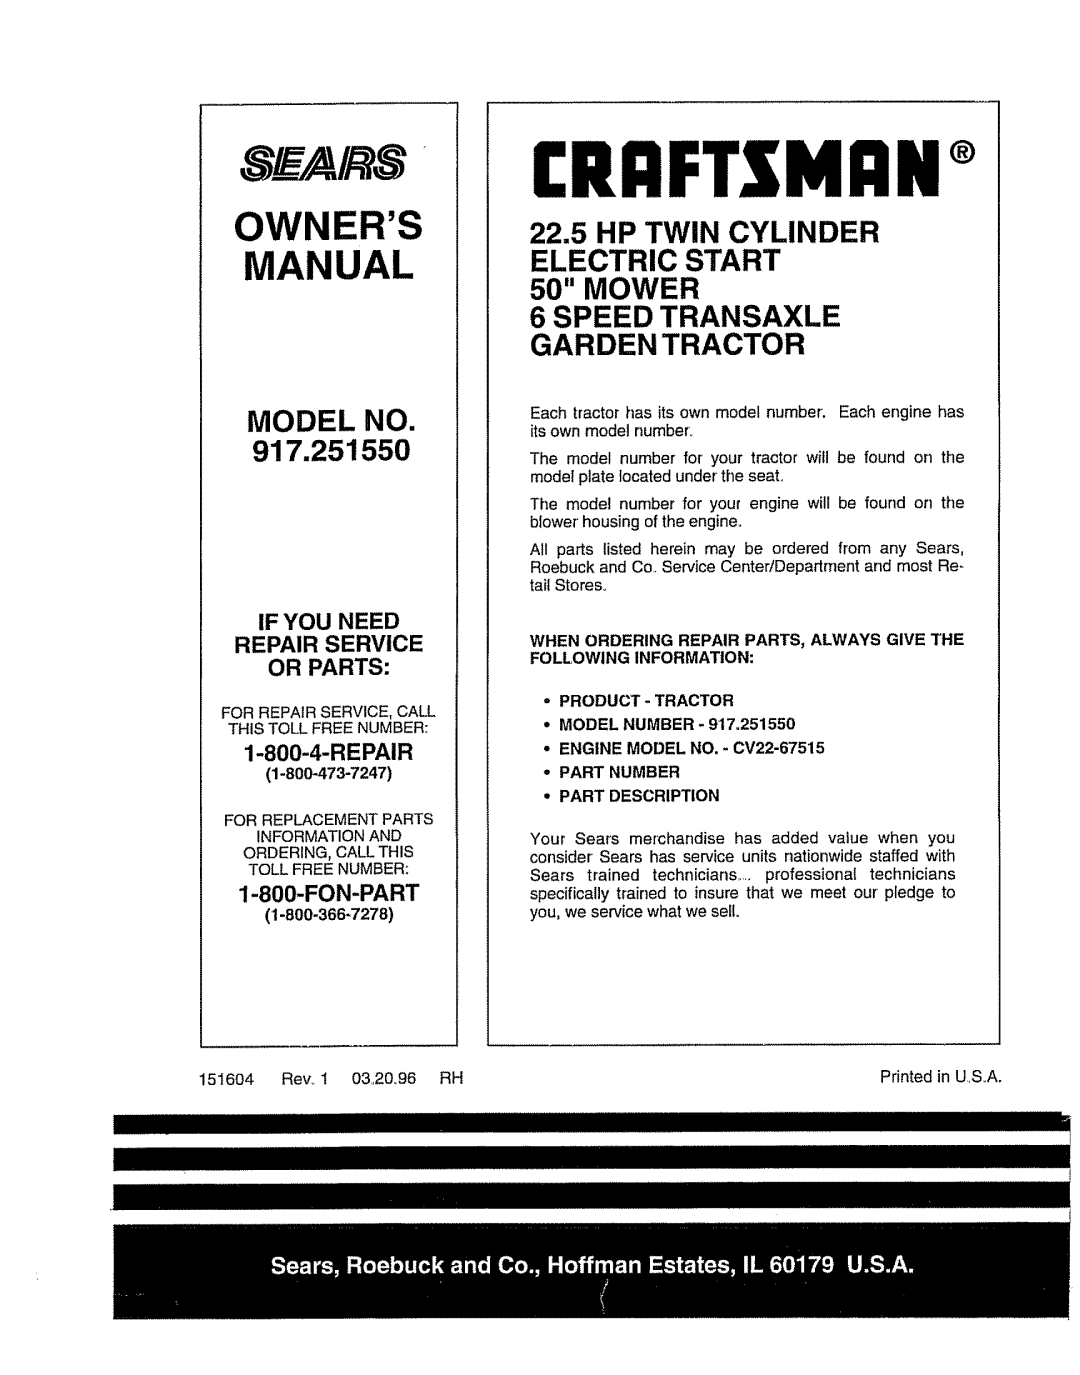 Craftsman 917O251550 Manual, Owners, Model No, 22.5HP TWIN CYLINDER ELECTRIC START 50 MOWER, Repair, Fon-Part, Mi:In 